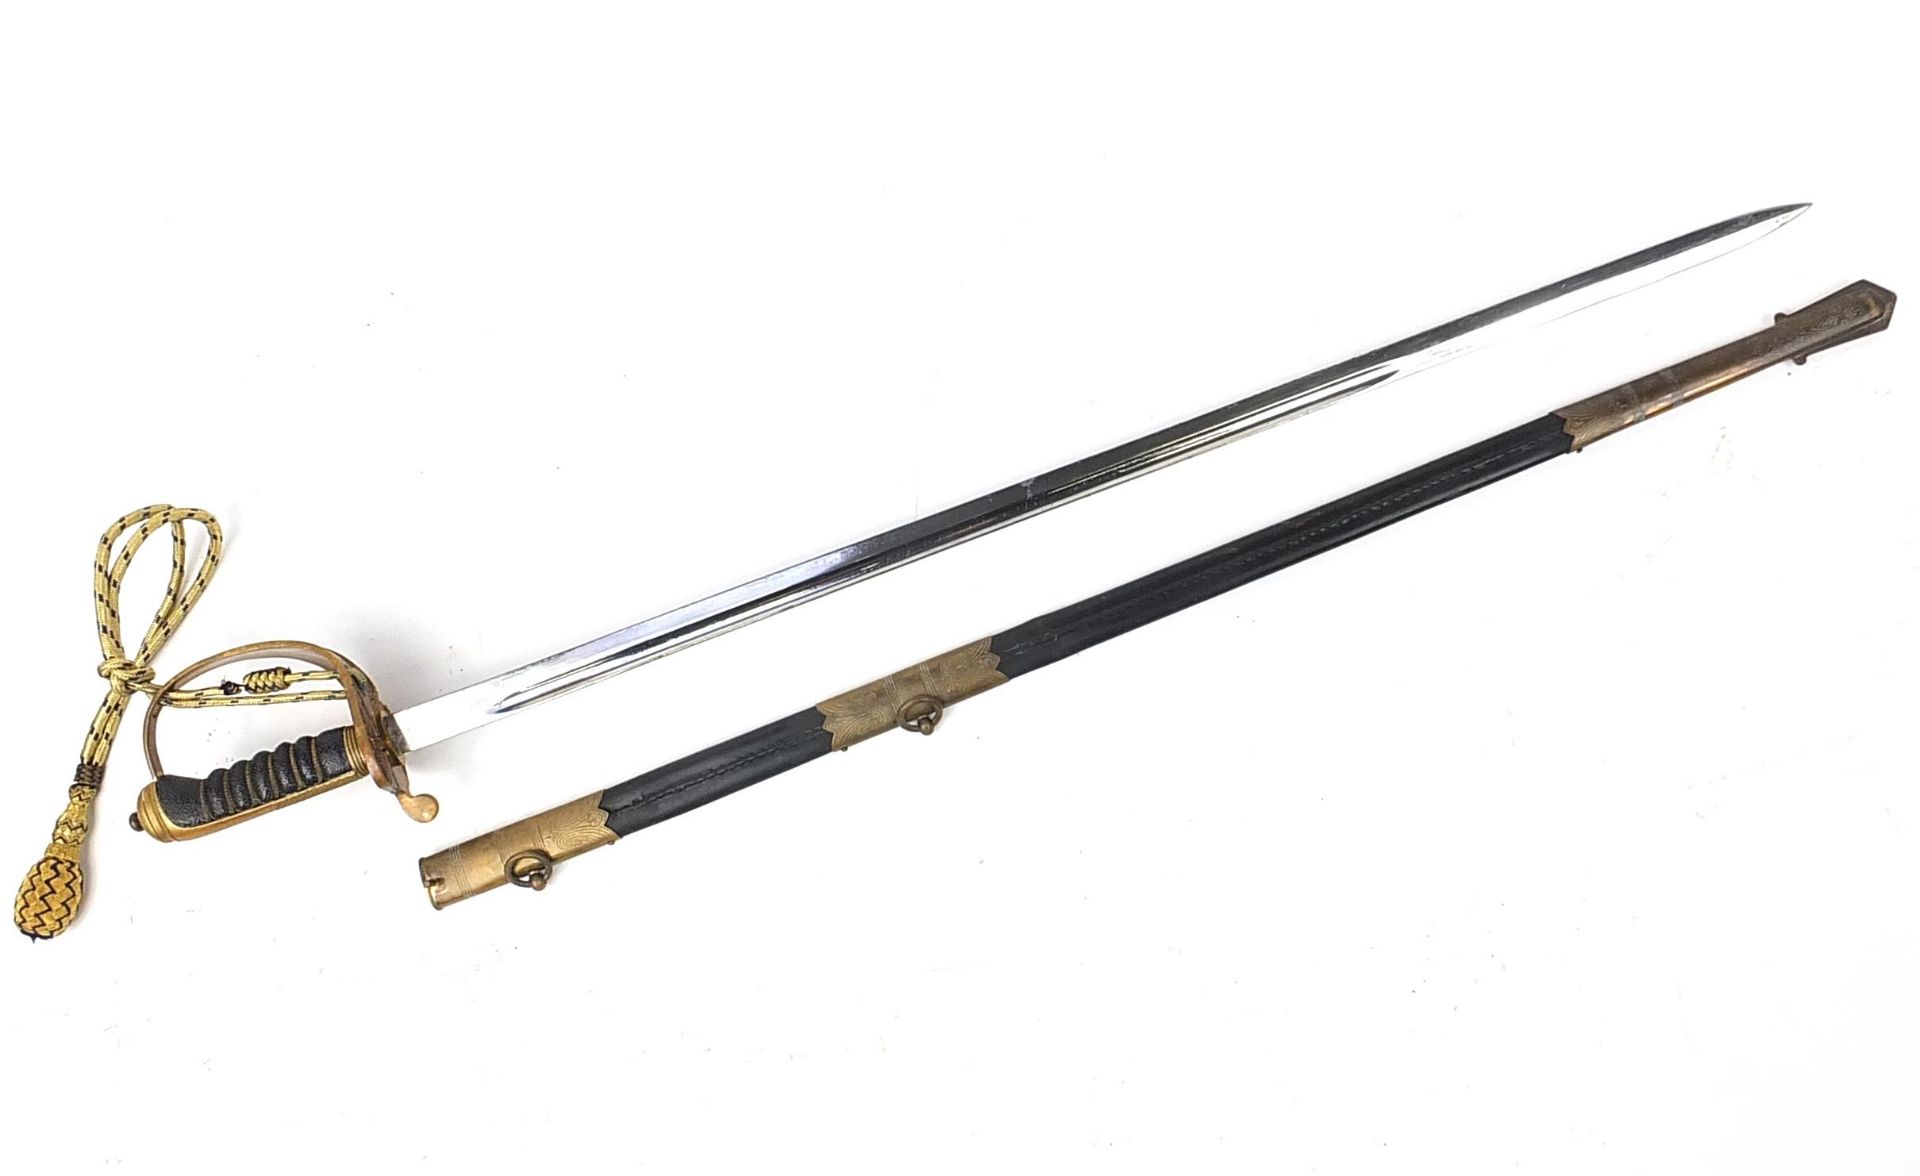 Elizabeth II naval interest dress sword with scabbard by Wilkinson, 96cm in length - Image 3 of 4